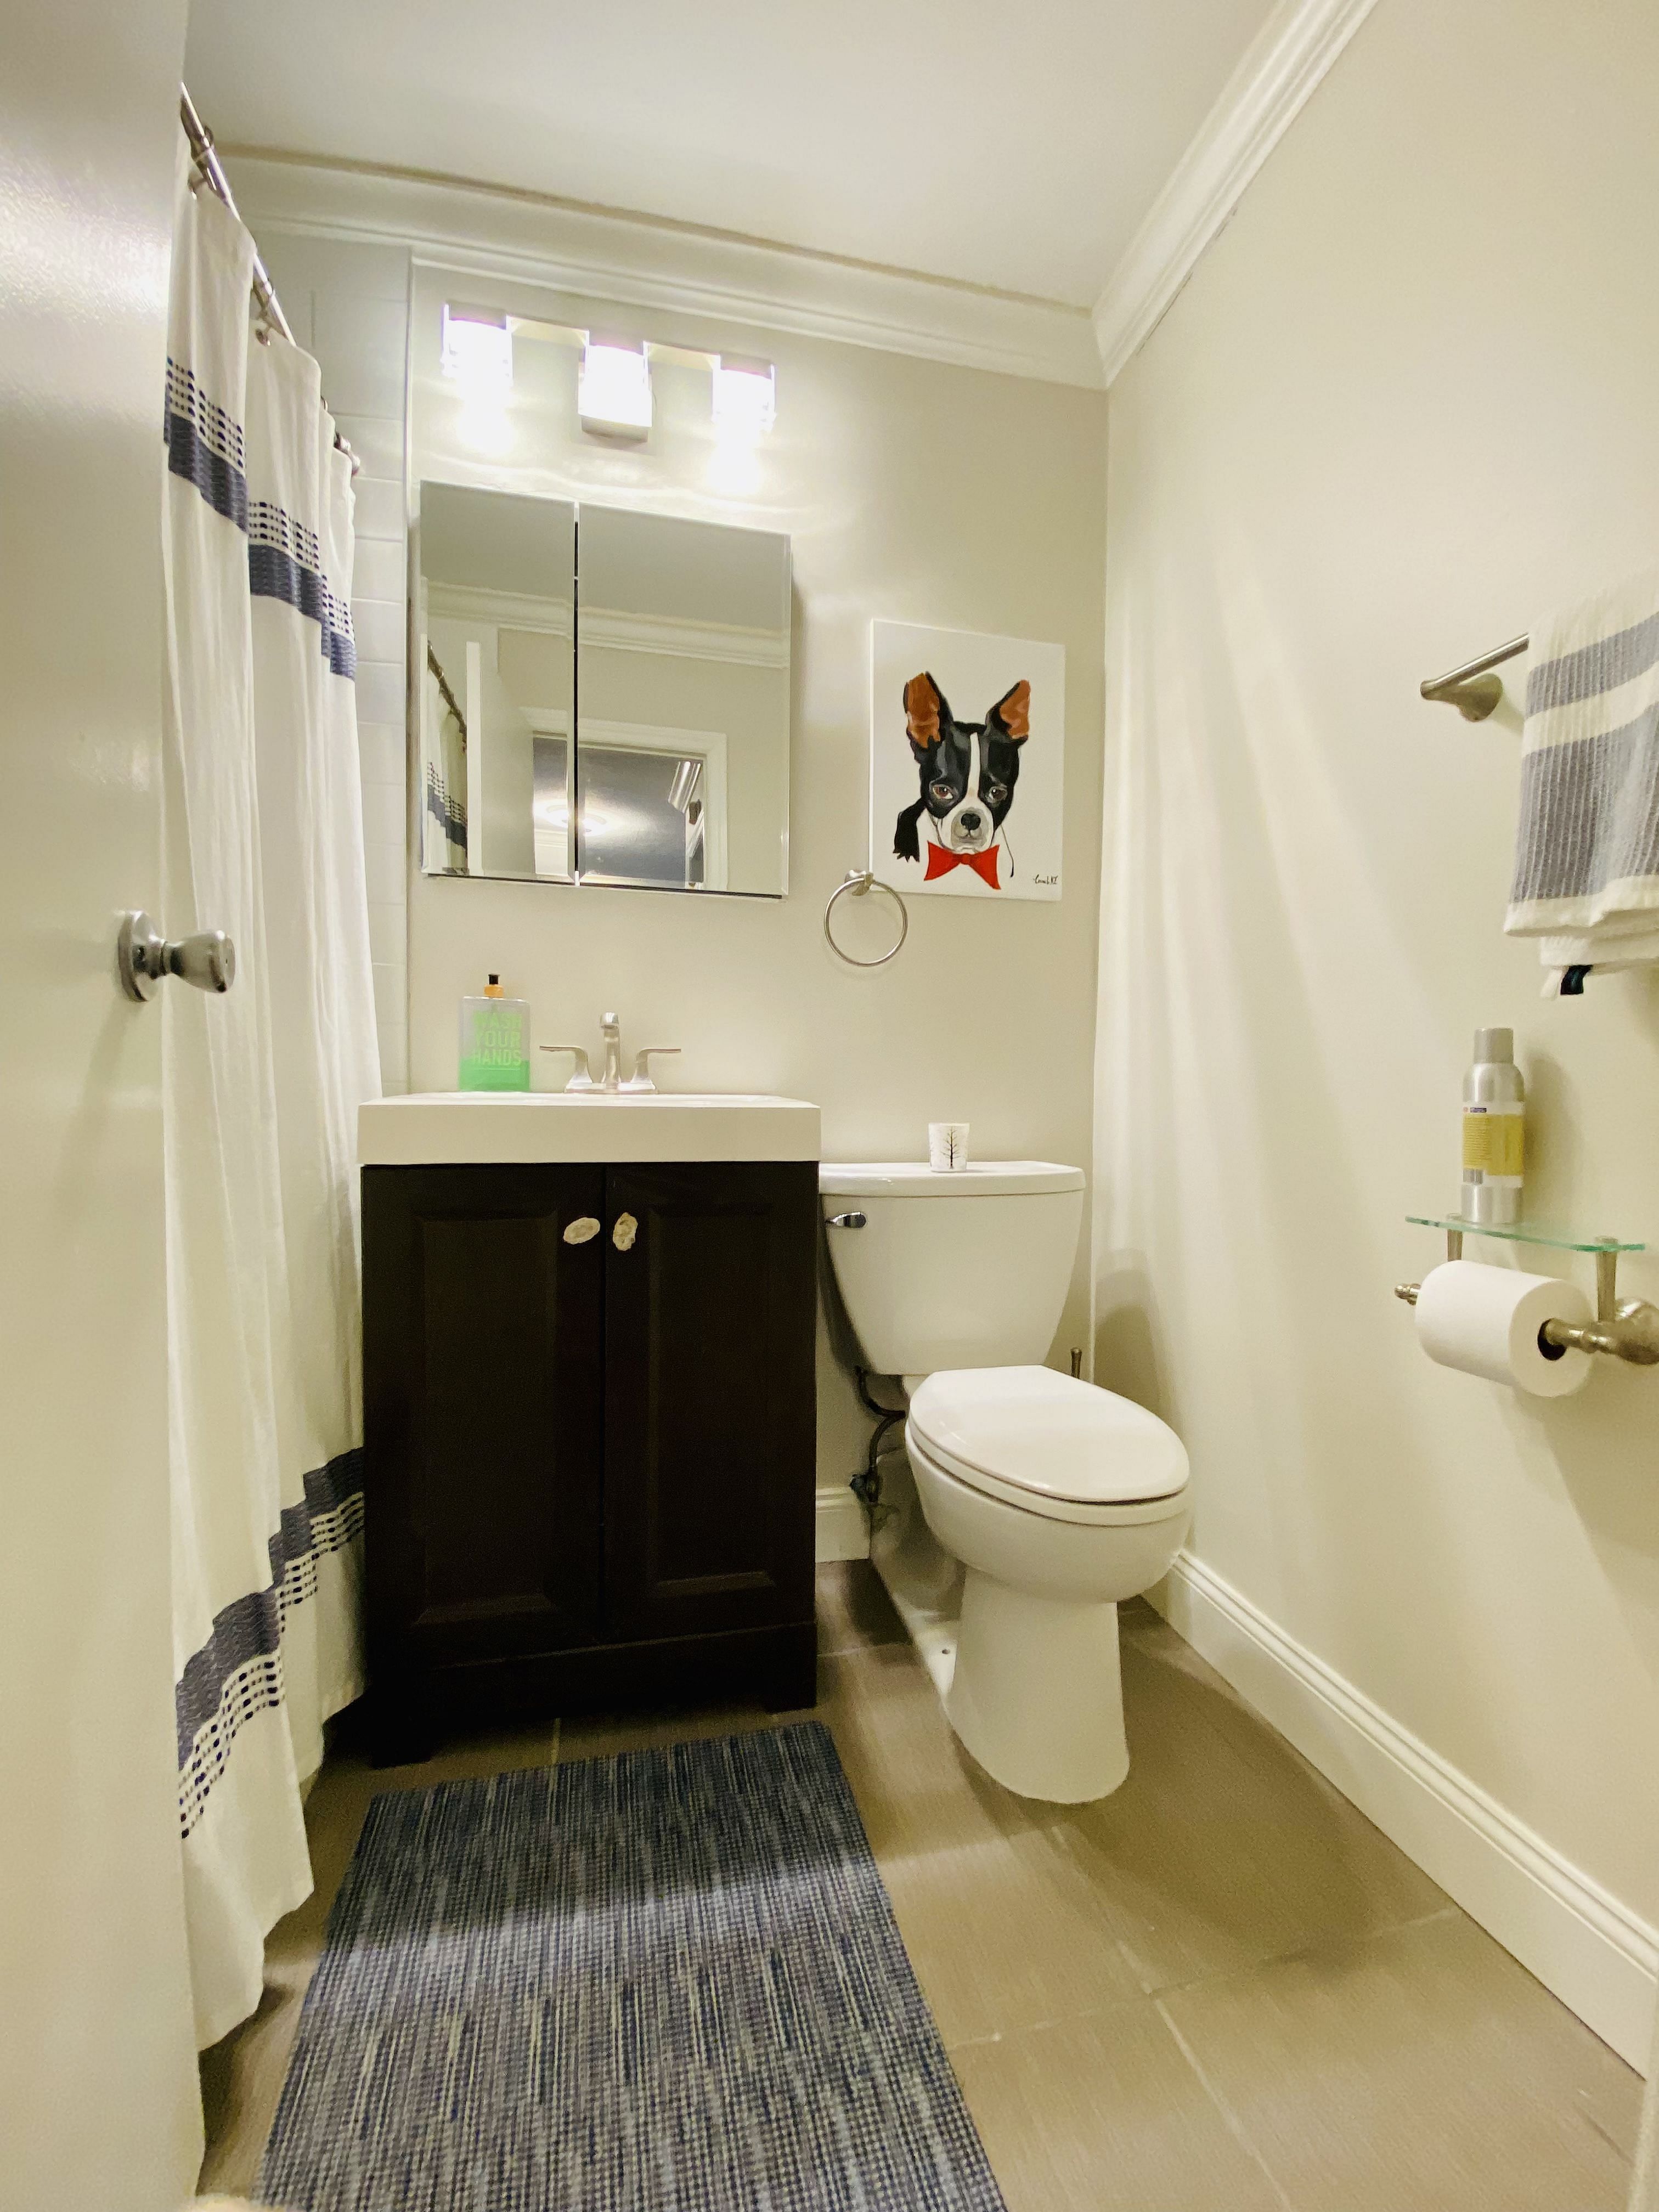 JWguest Apartment at Mount Kisco, New York | Modern Cozy Apartment Close to Bethels | Jwbnb no brobnb 9